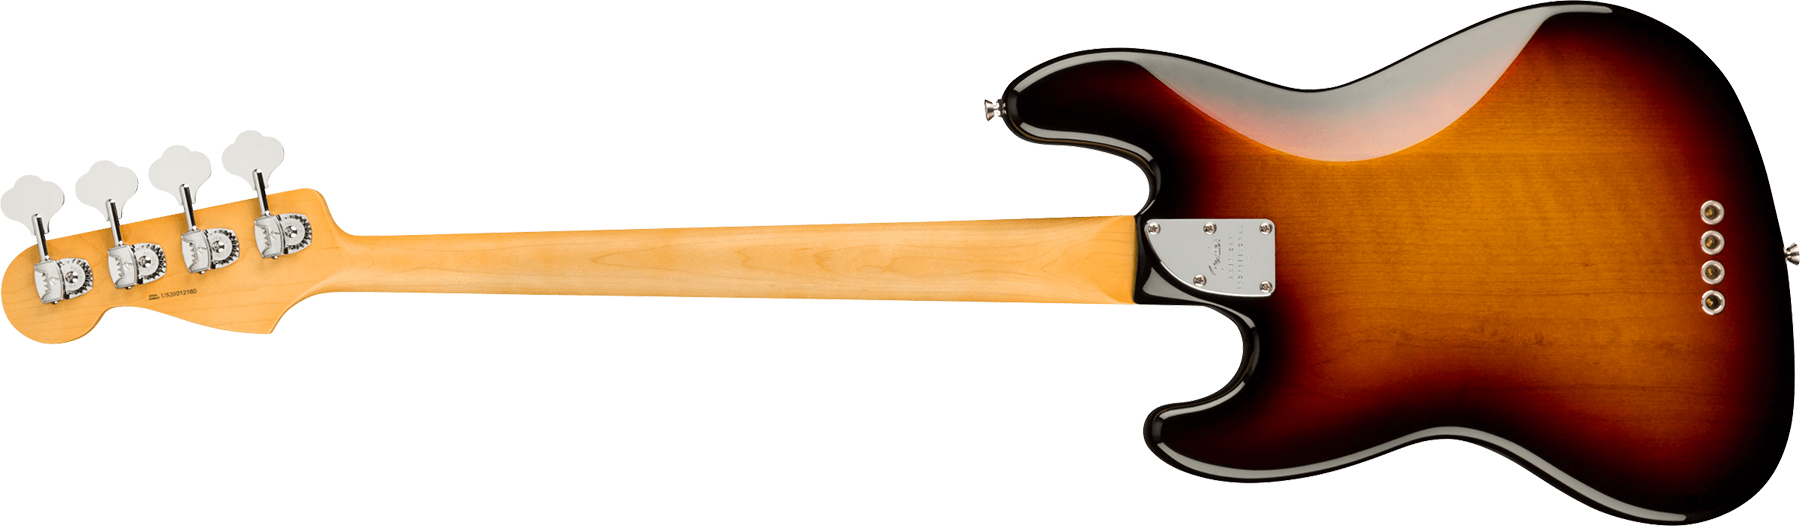 Fender Jazz Bass American Professional Ii Usa Rw - 3-color Sunburst - Solid body electric bass - Variation 1